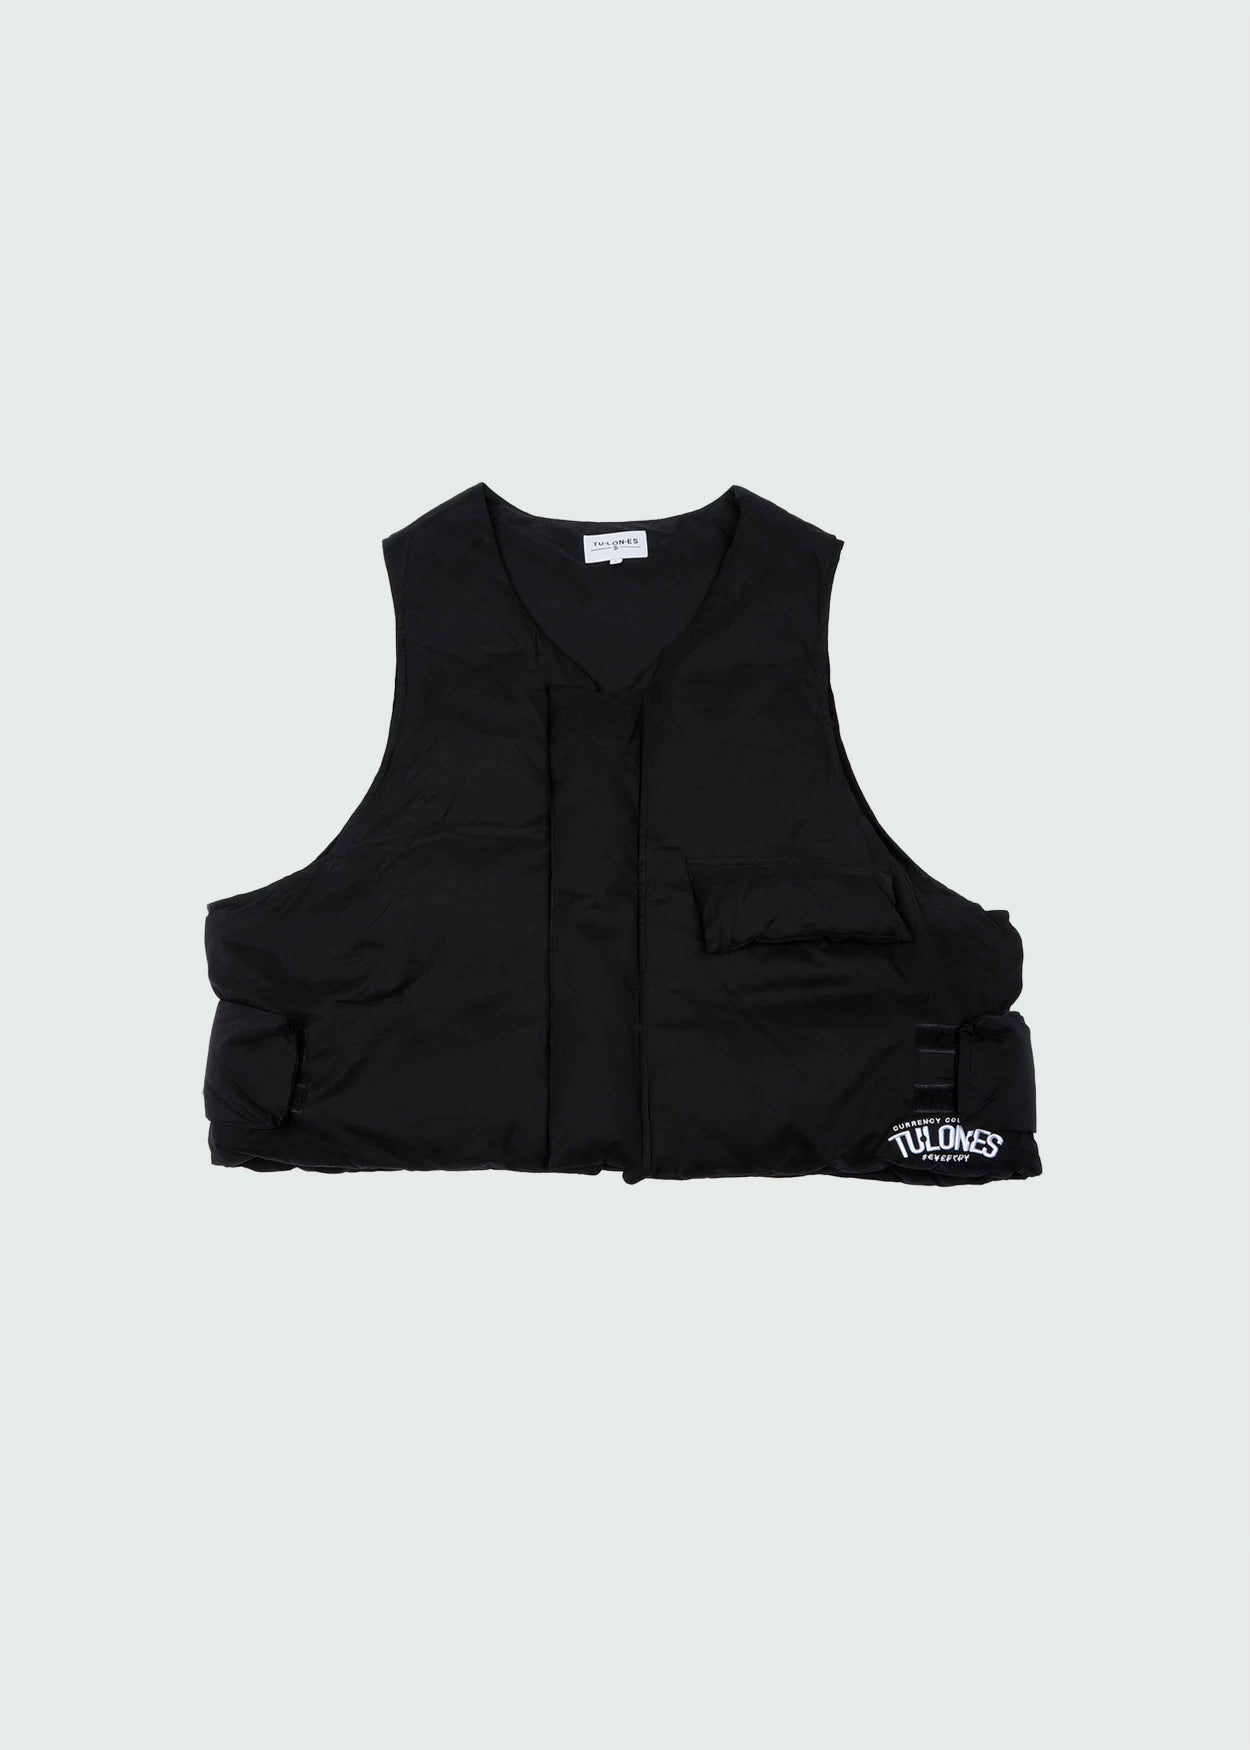 Black Tulones Bubble vest